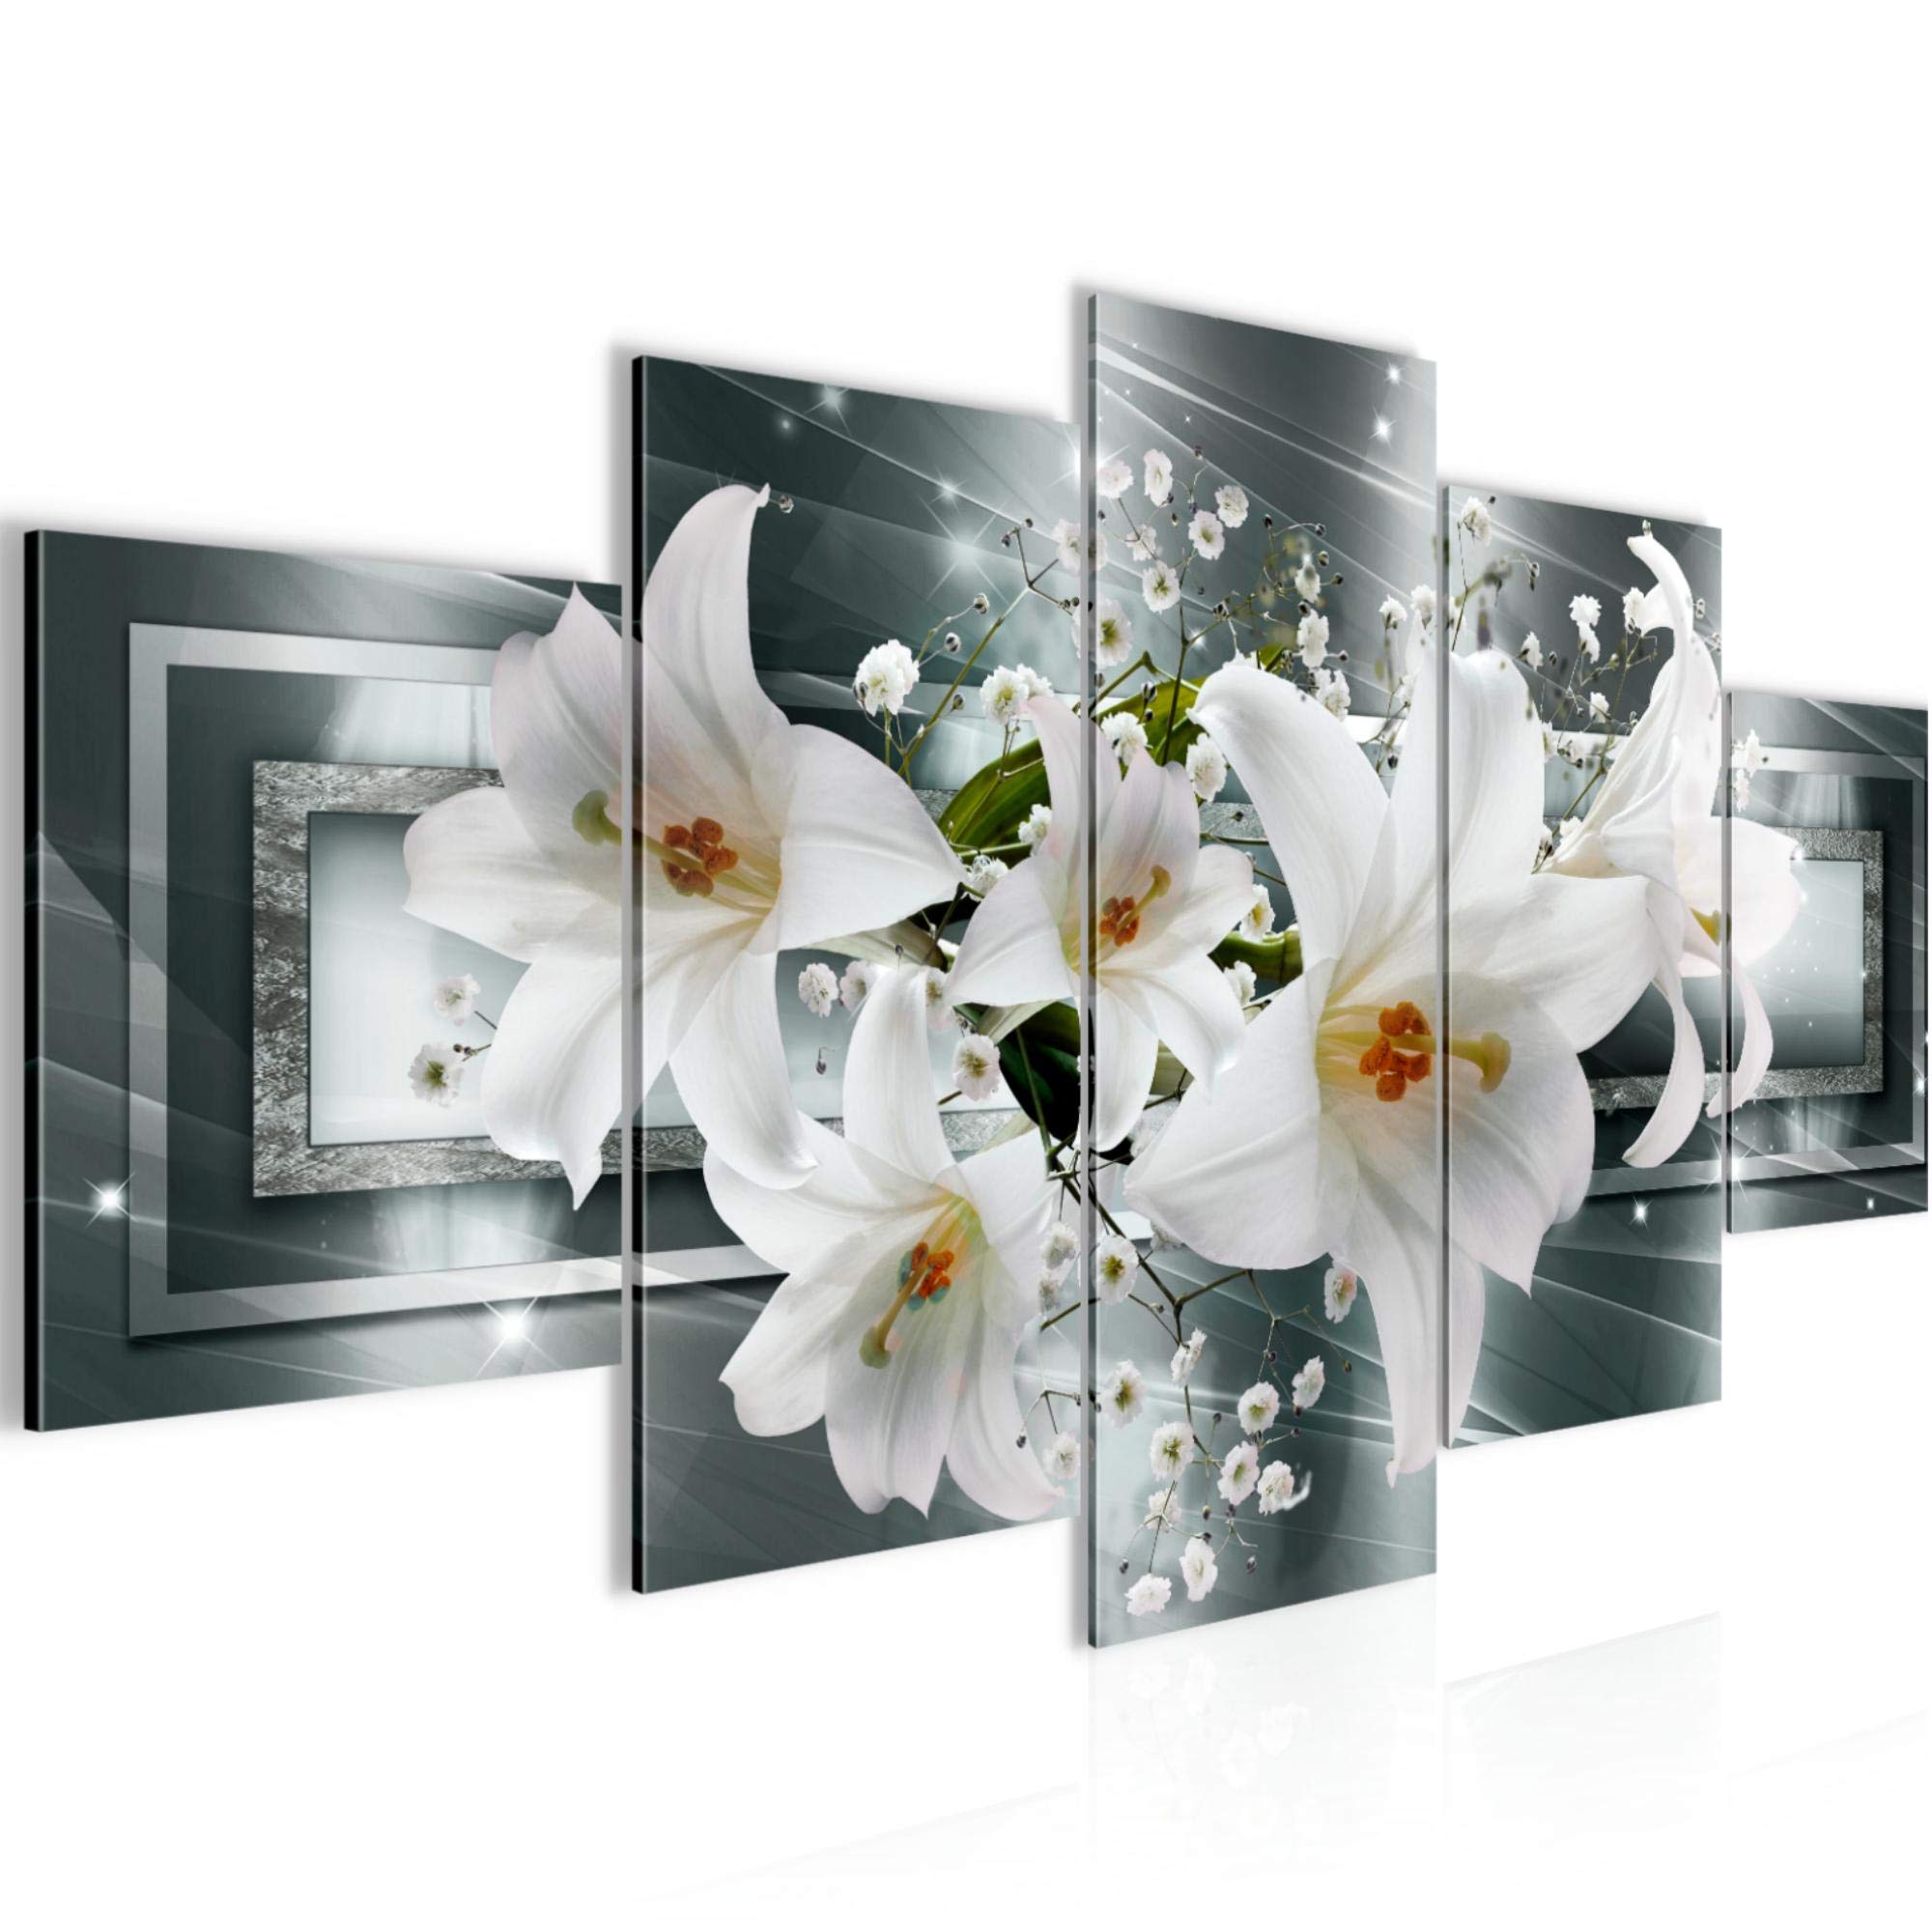 Runa Art - Bilder Blumen Lilien 200 x 100 cm 5 Teilig XXL Wanddekoration Design Grau Grün 204751a